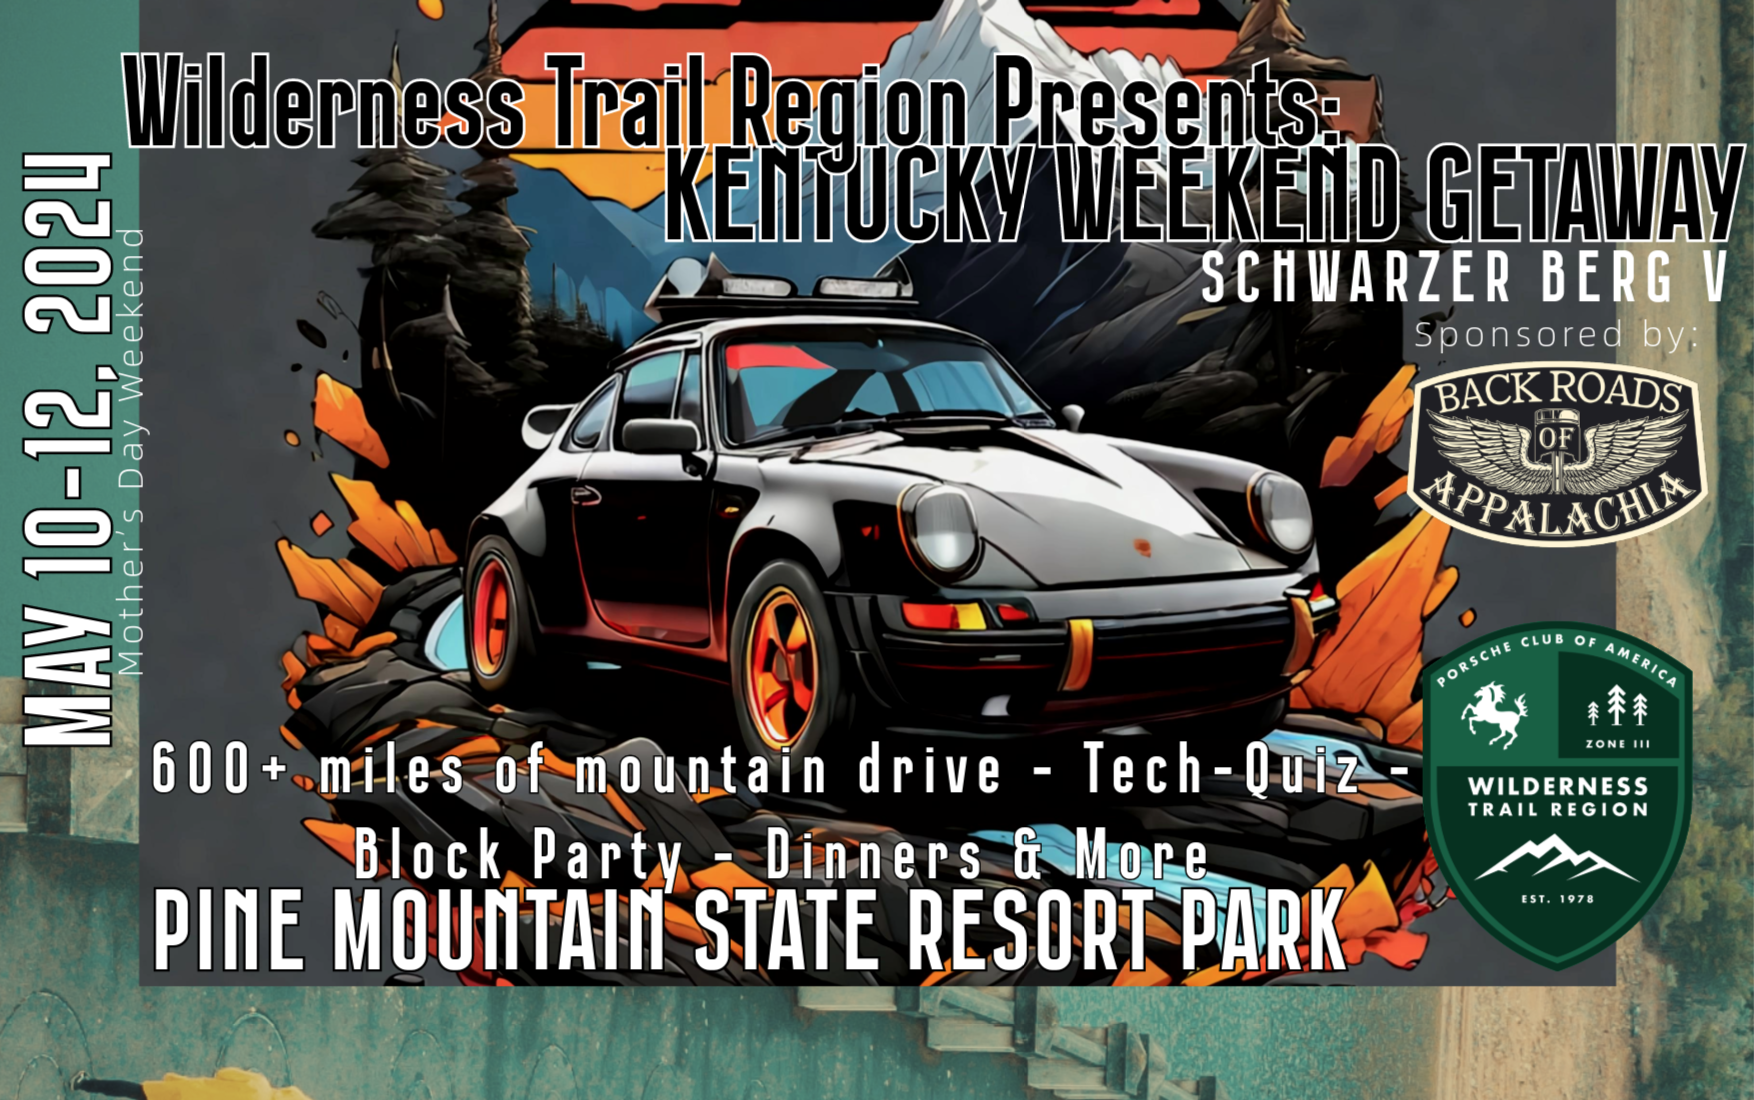 Porsche Club of America - Kentucky Weekend Getaway - Pineville, KY - Schwarzer Berg V